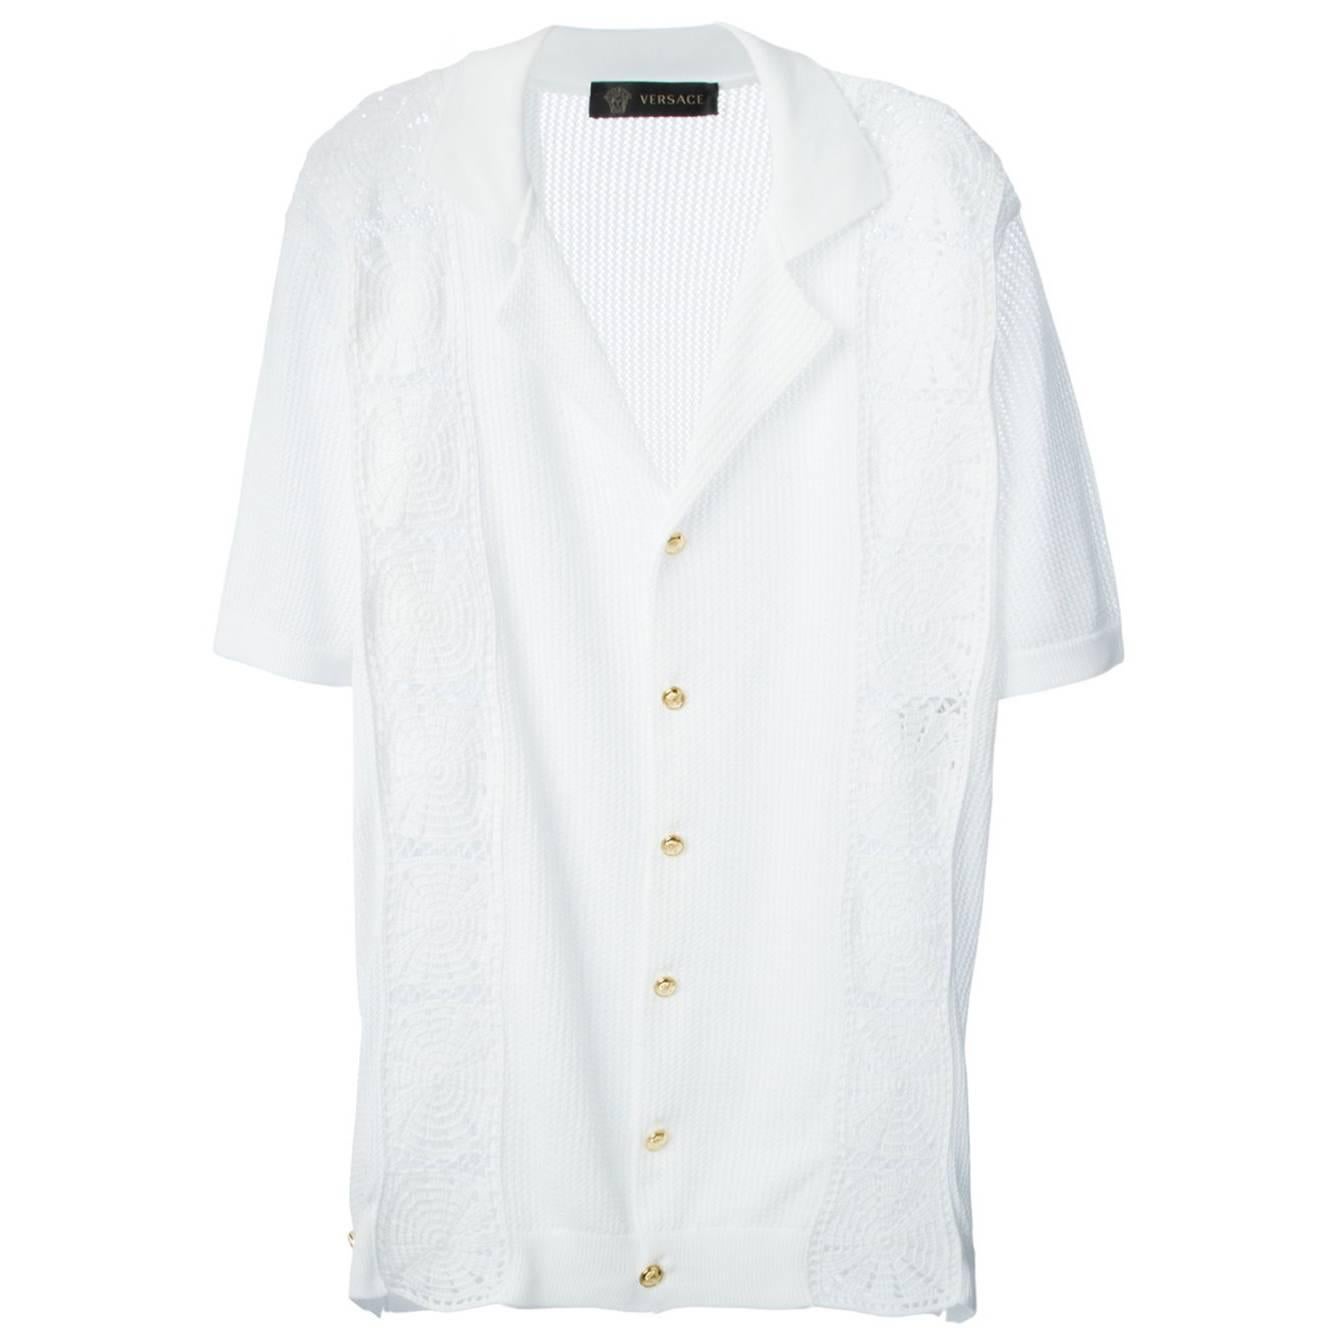 New $1875 Versace Men's White Cotton Macrame Dress Shirt Cardigan Italian 54, 50